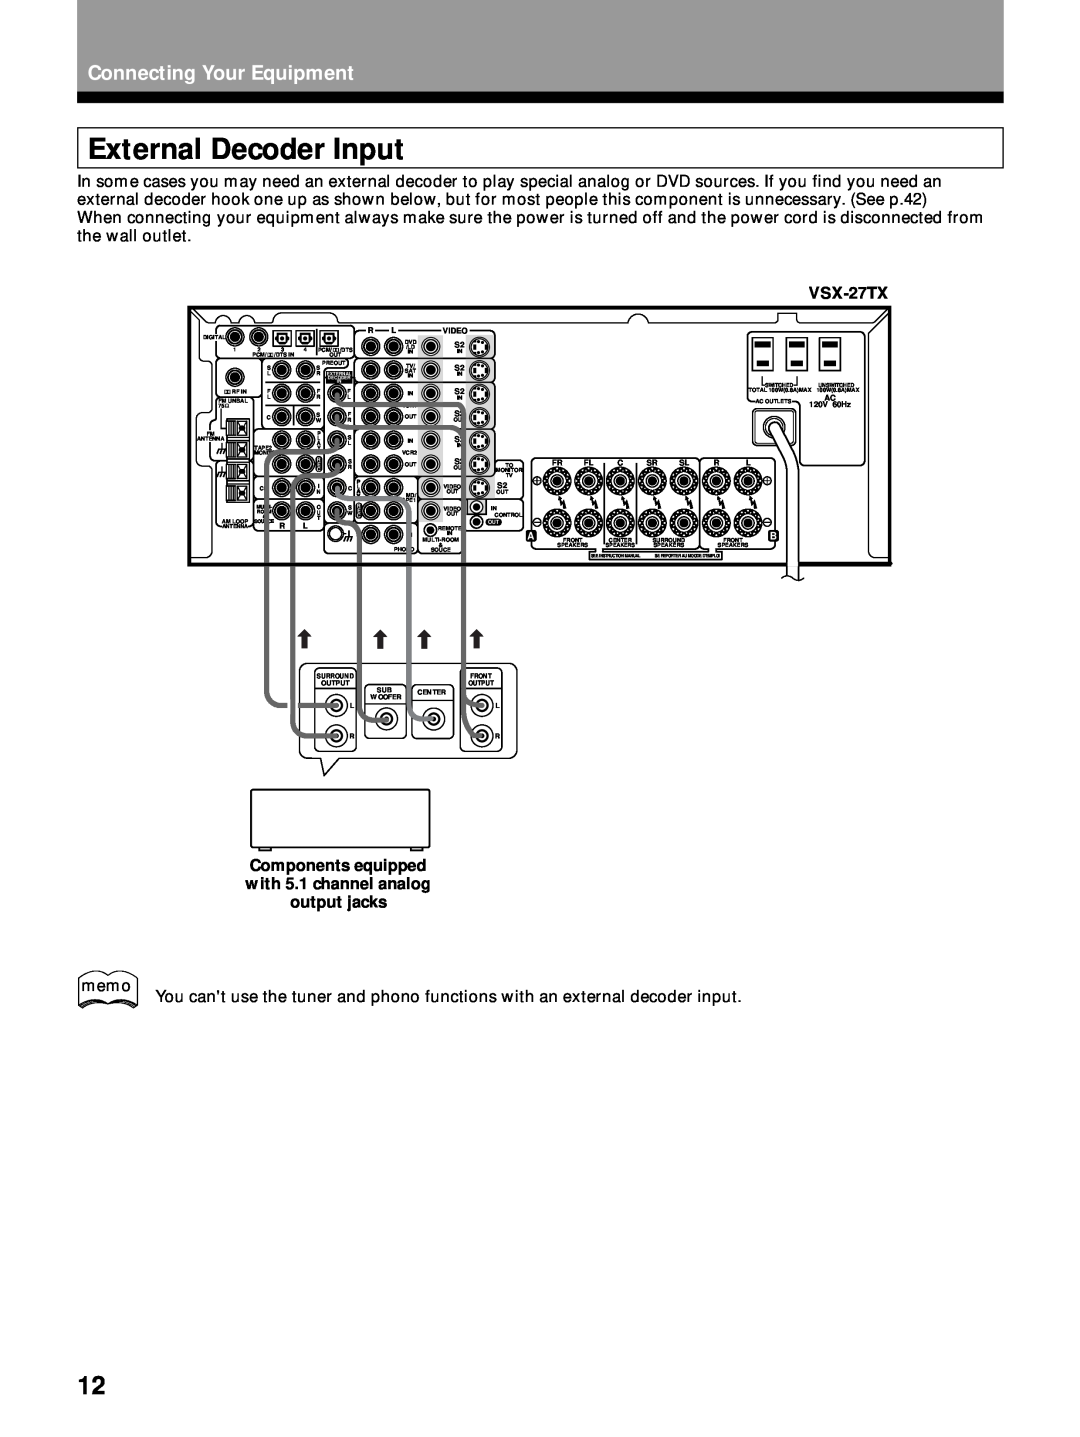 Pioneer VSX-27TX, VSX-26TX, VSX-24TX manual External Decoder Input, Connecting Your Equipment 